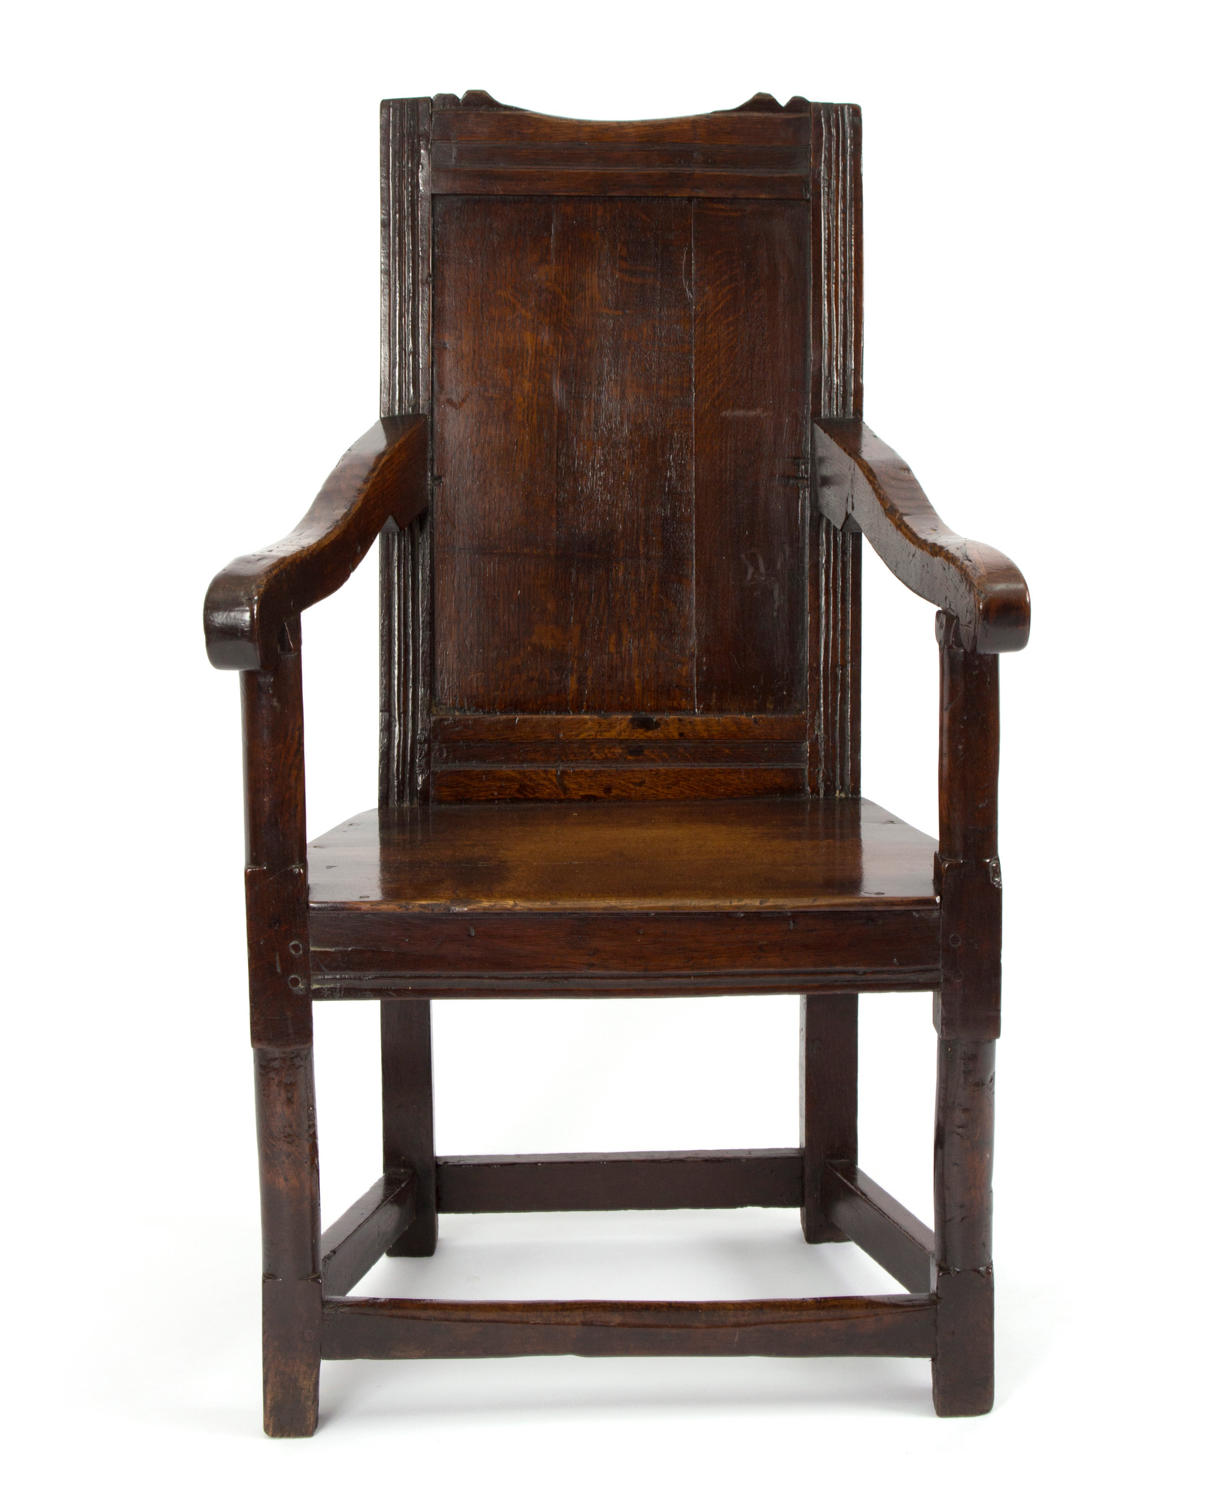 Late 17th century oak panel back wainscot chair